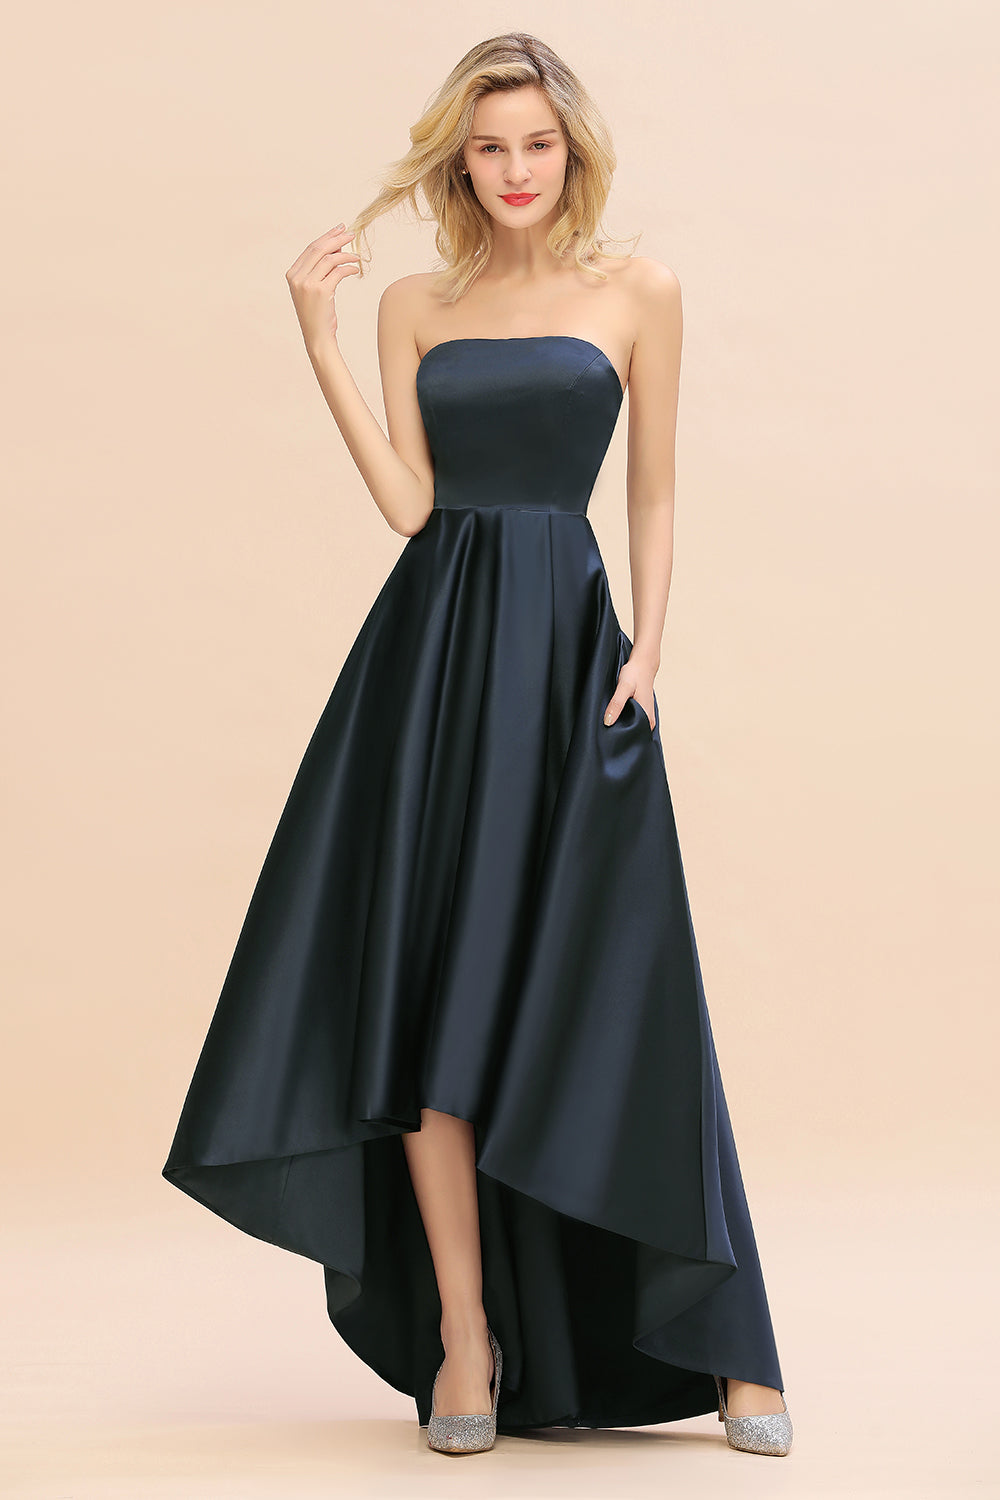 Affordable Hi-Lo Strapless Satin Bridesmaid dresses Online-27dress